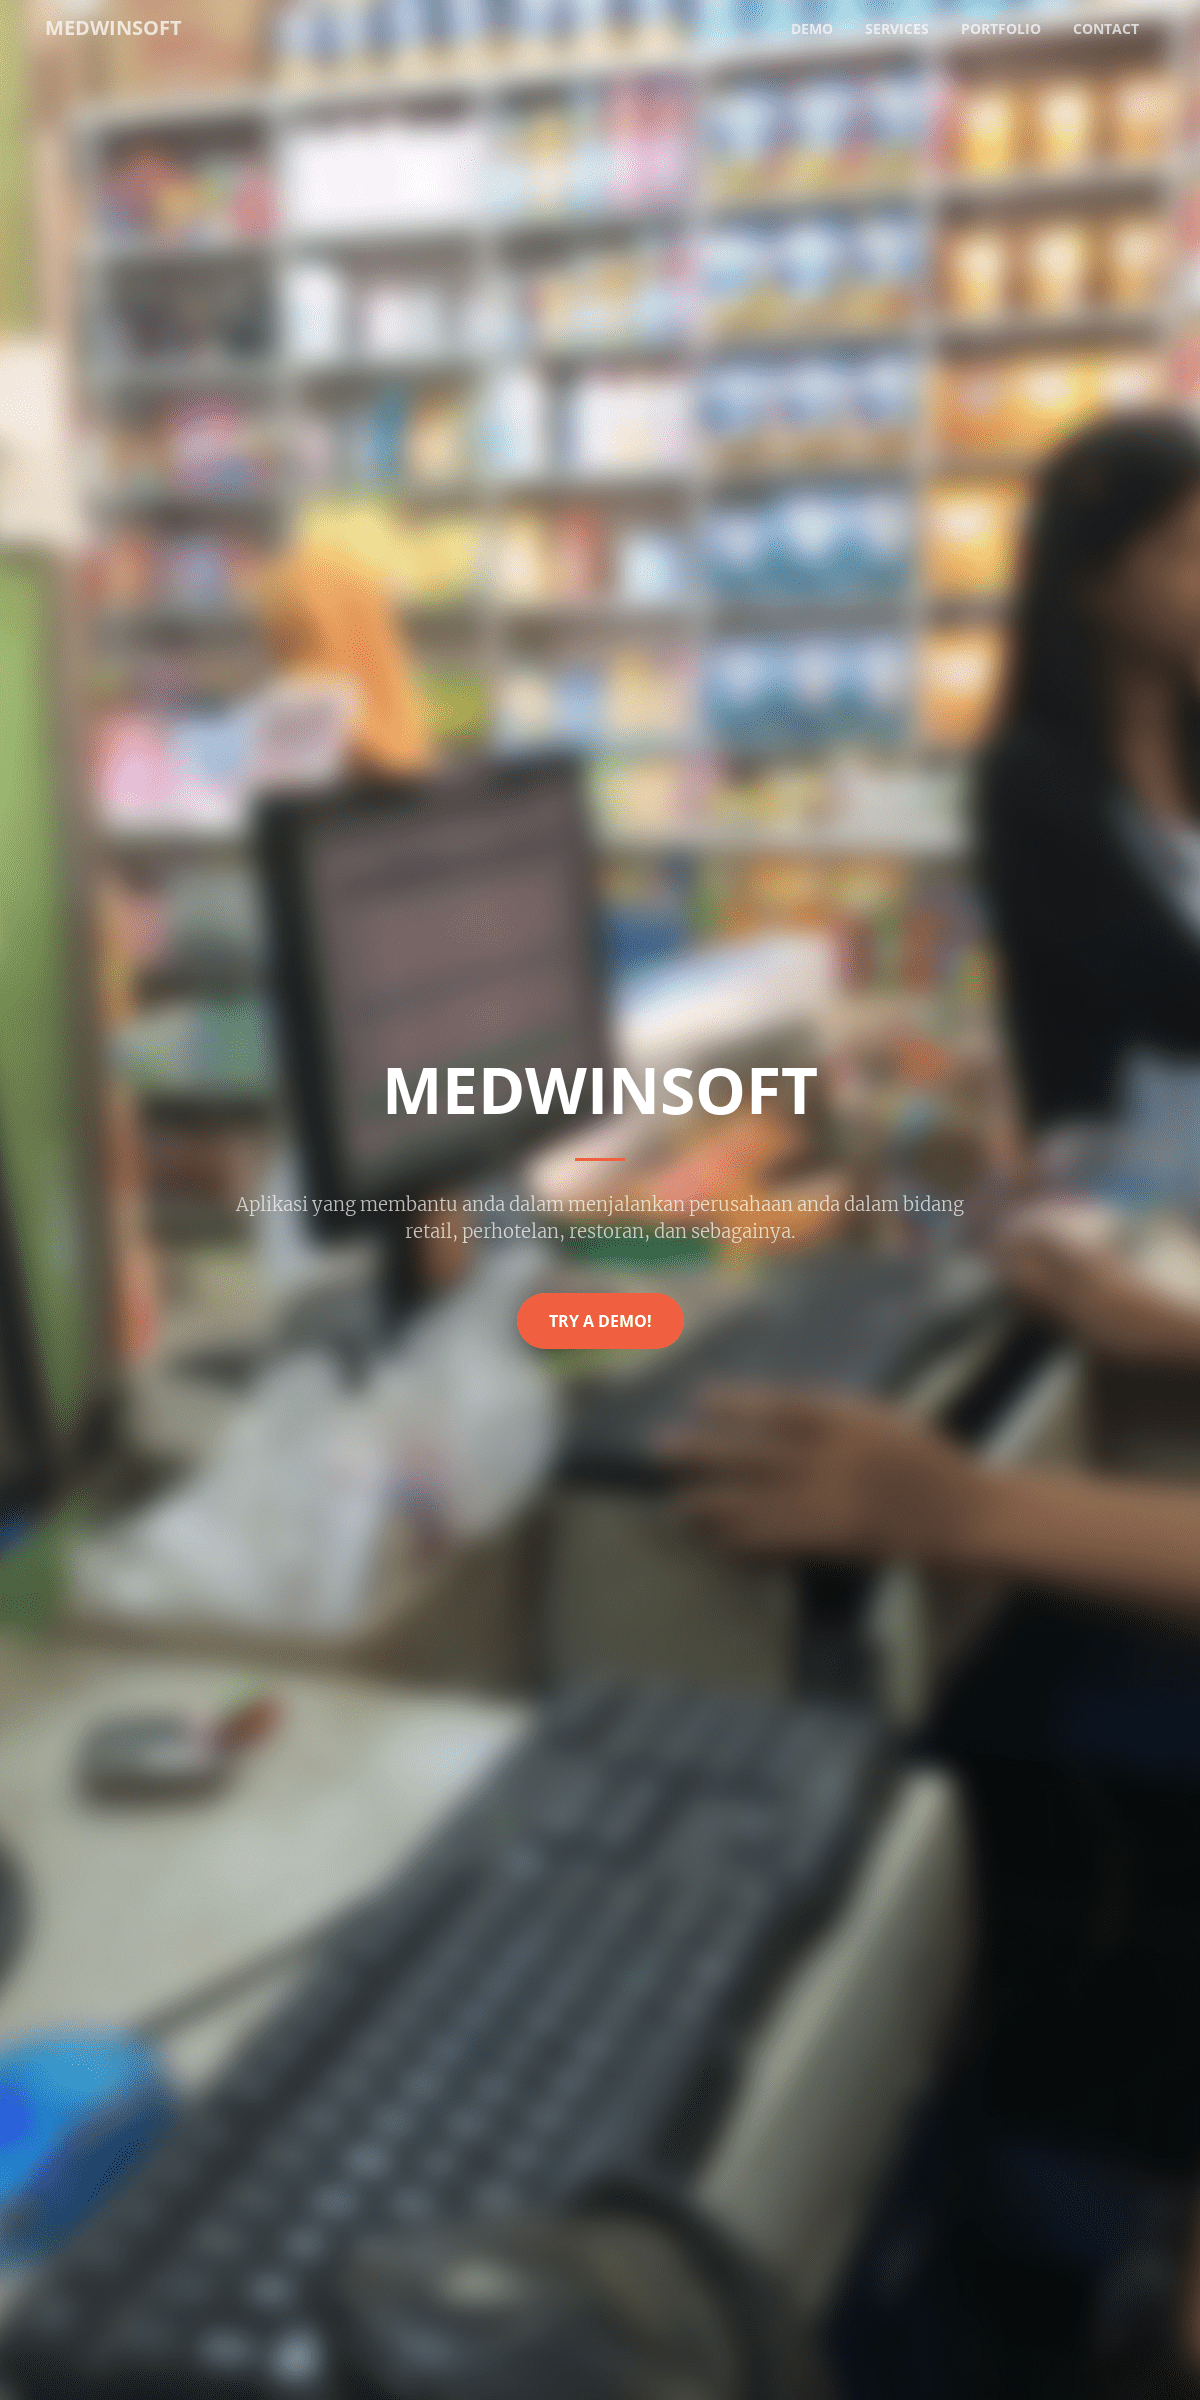 A complete backup of medwinsoft.com